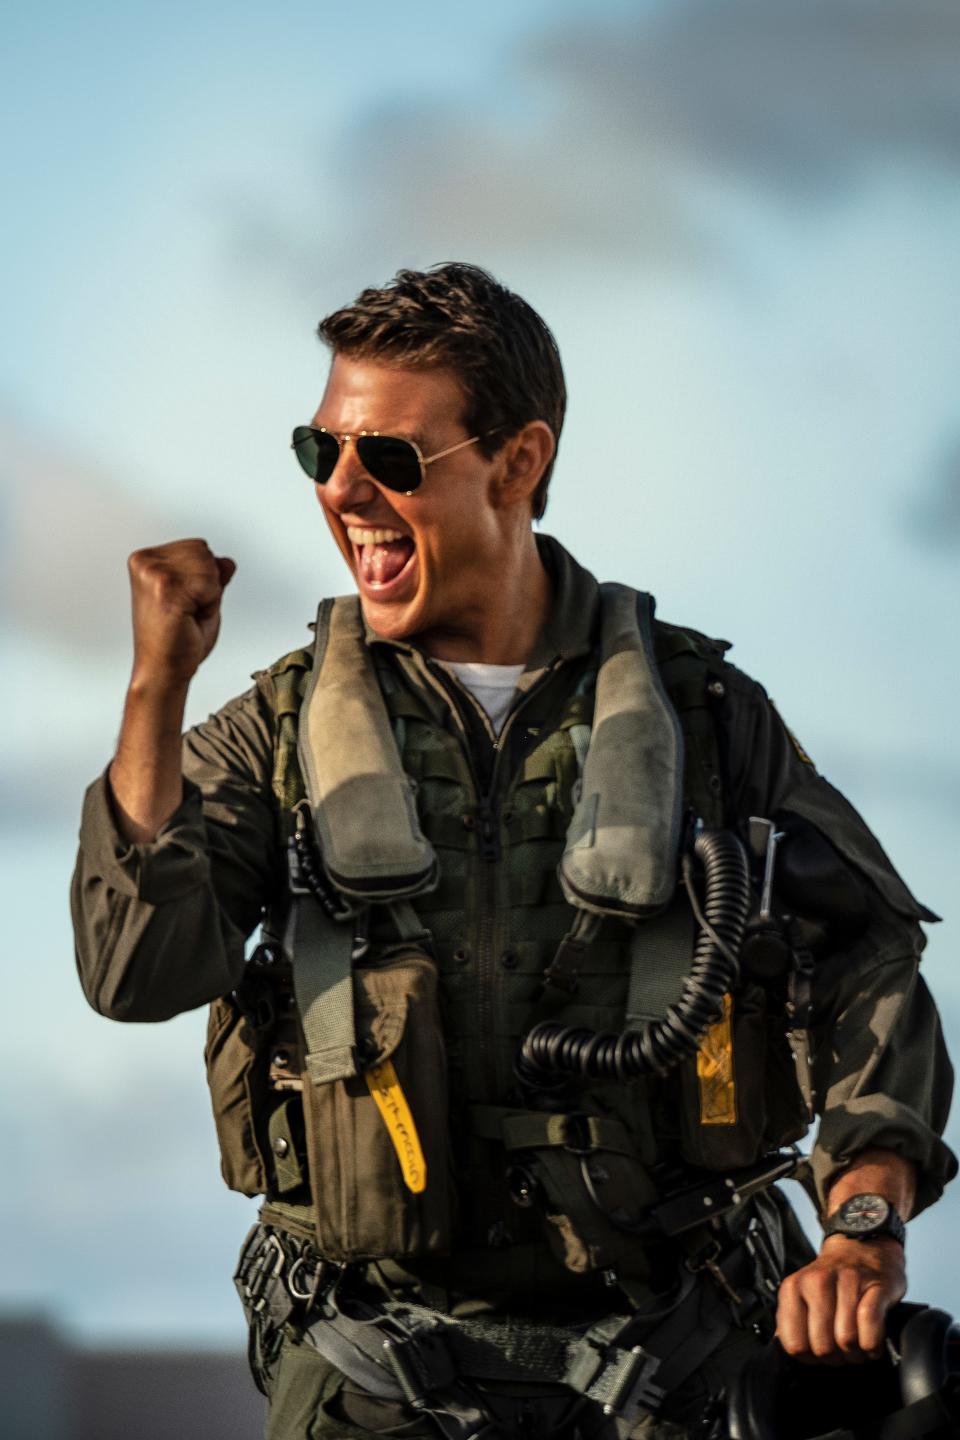 Tom Cruise reprises his role as Capt. Pete "Maverick" Mitchell in "Top Gun: Maverick."